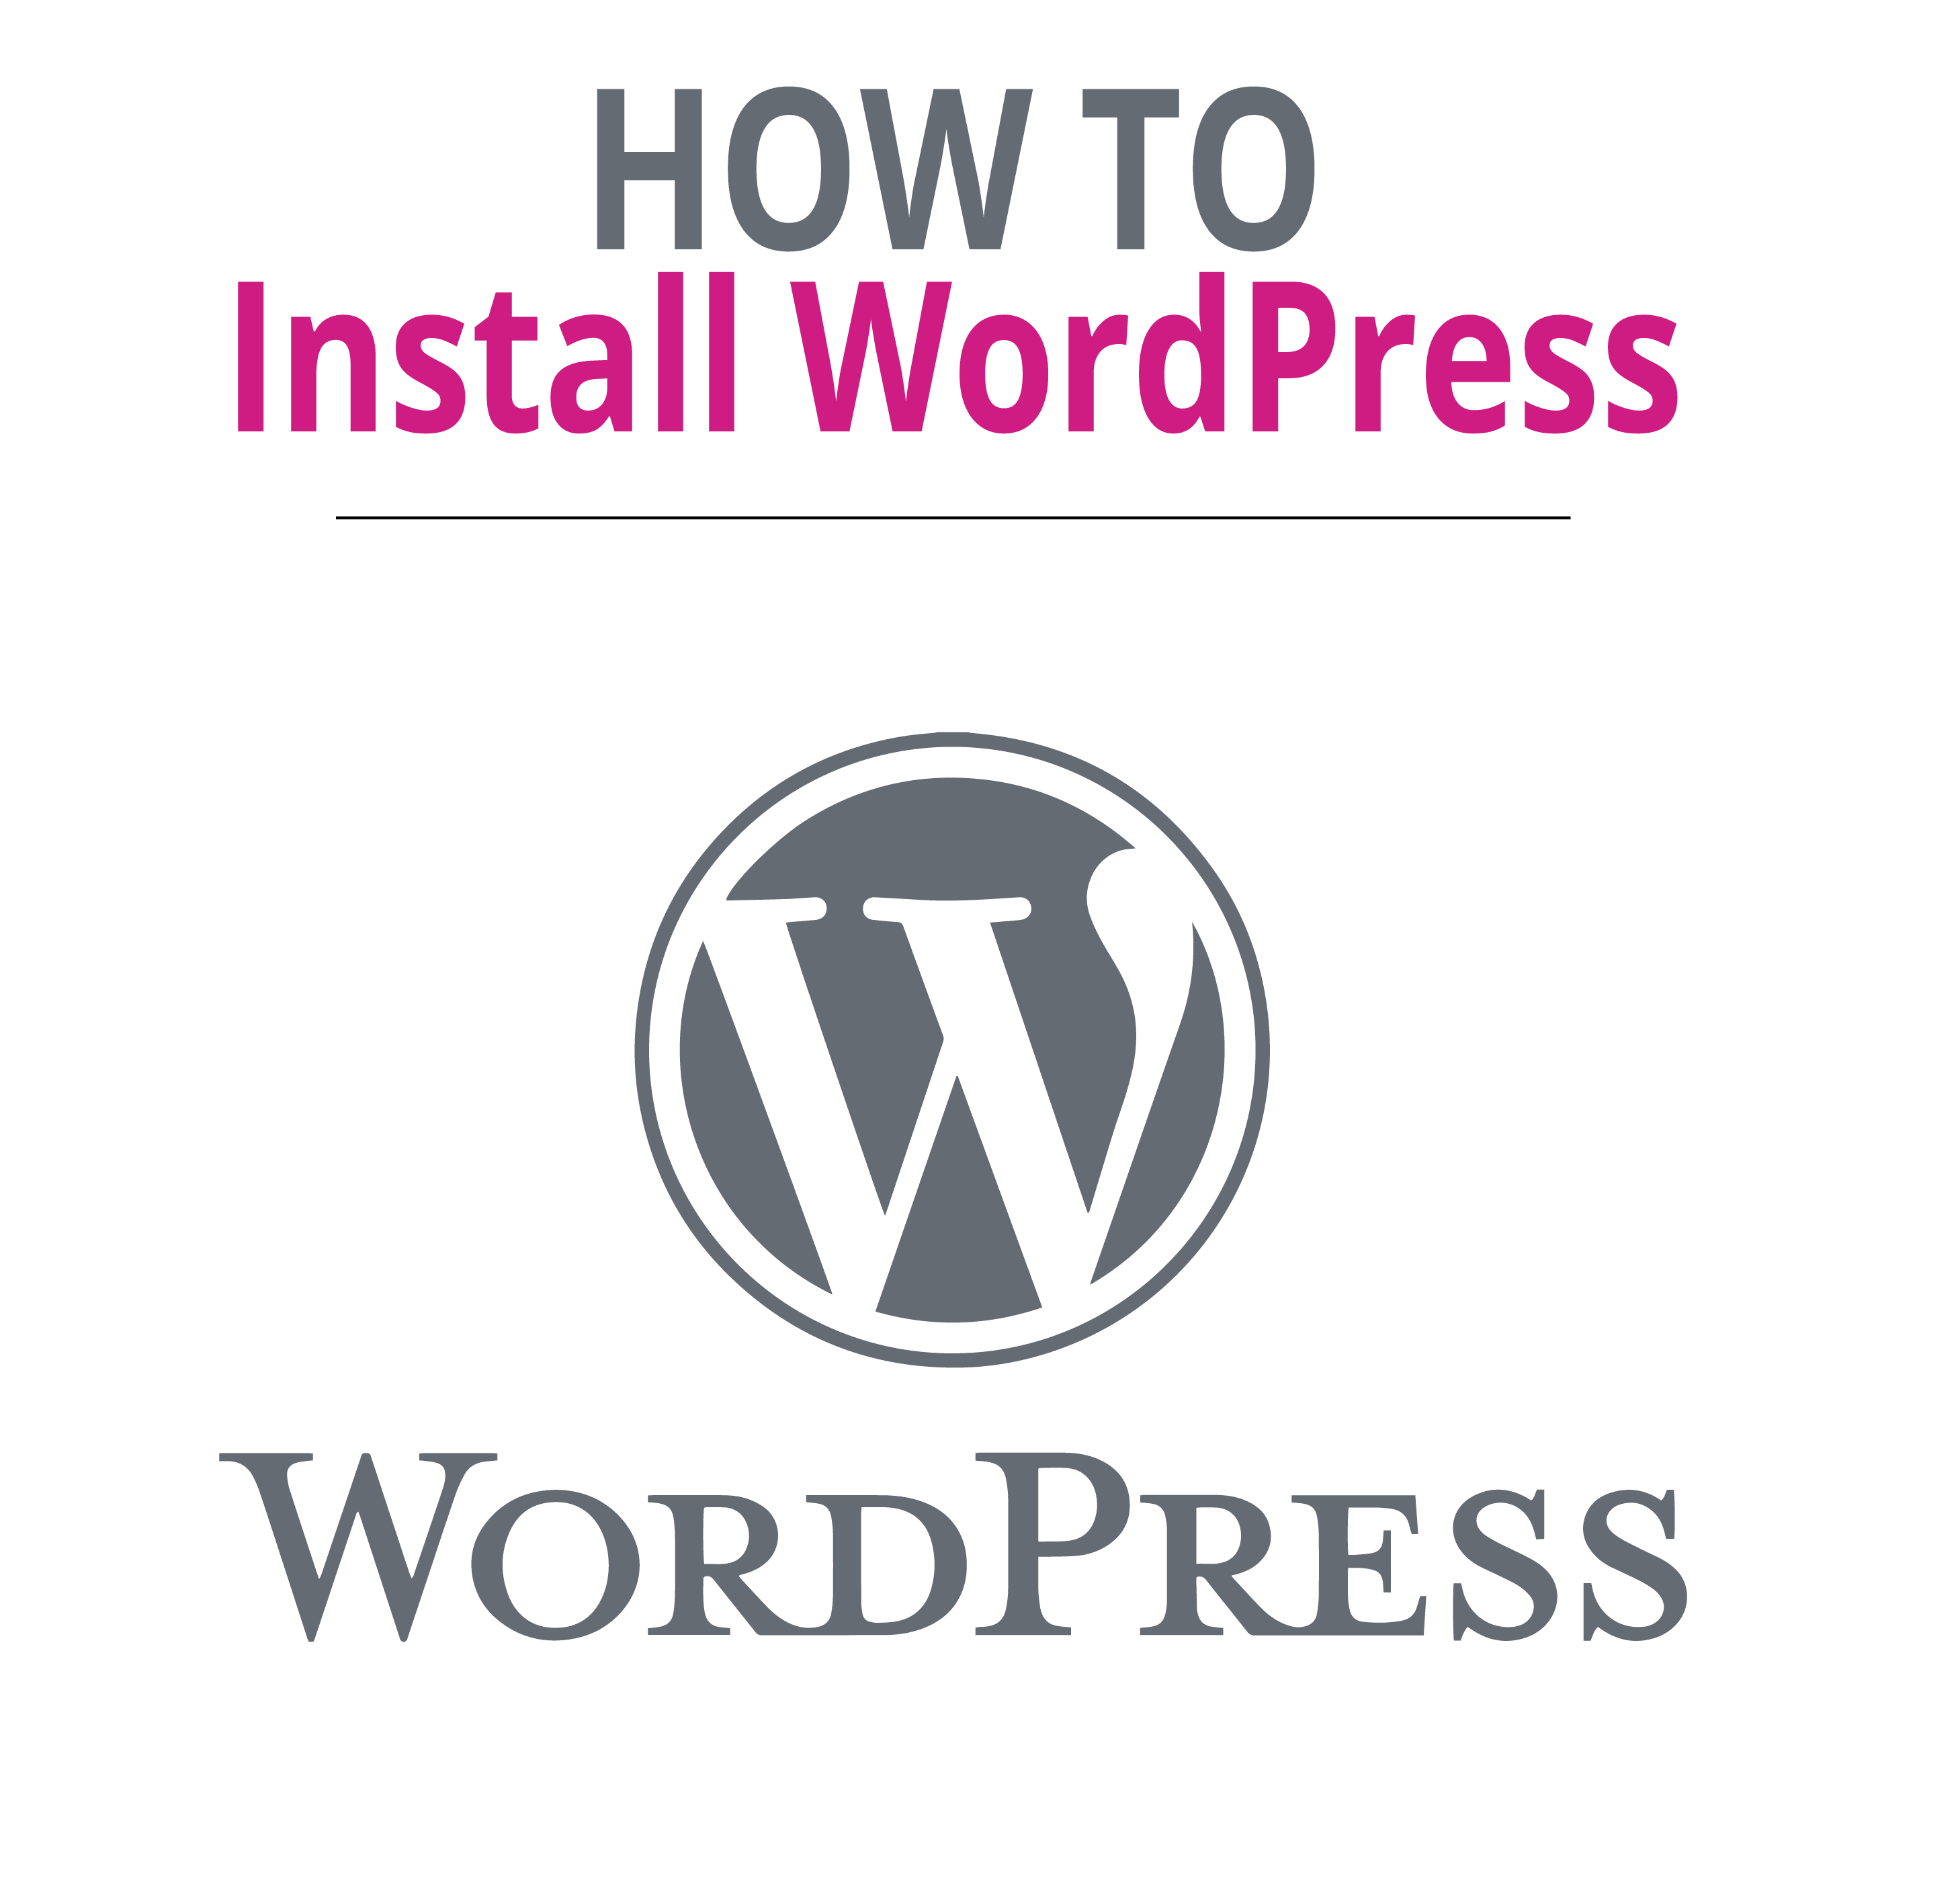 how-to-install-wordpress